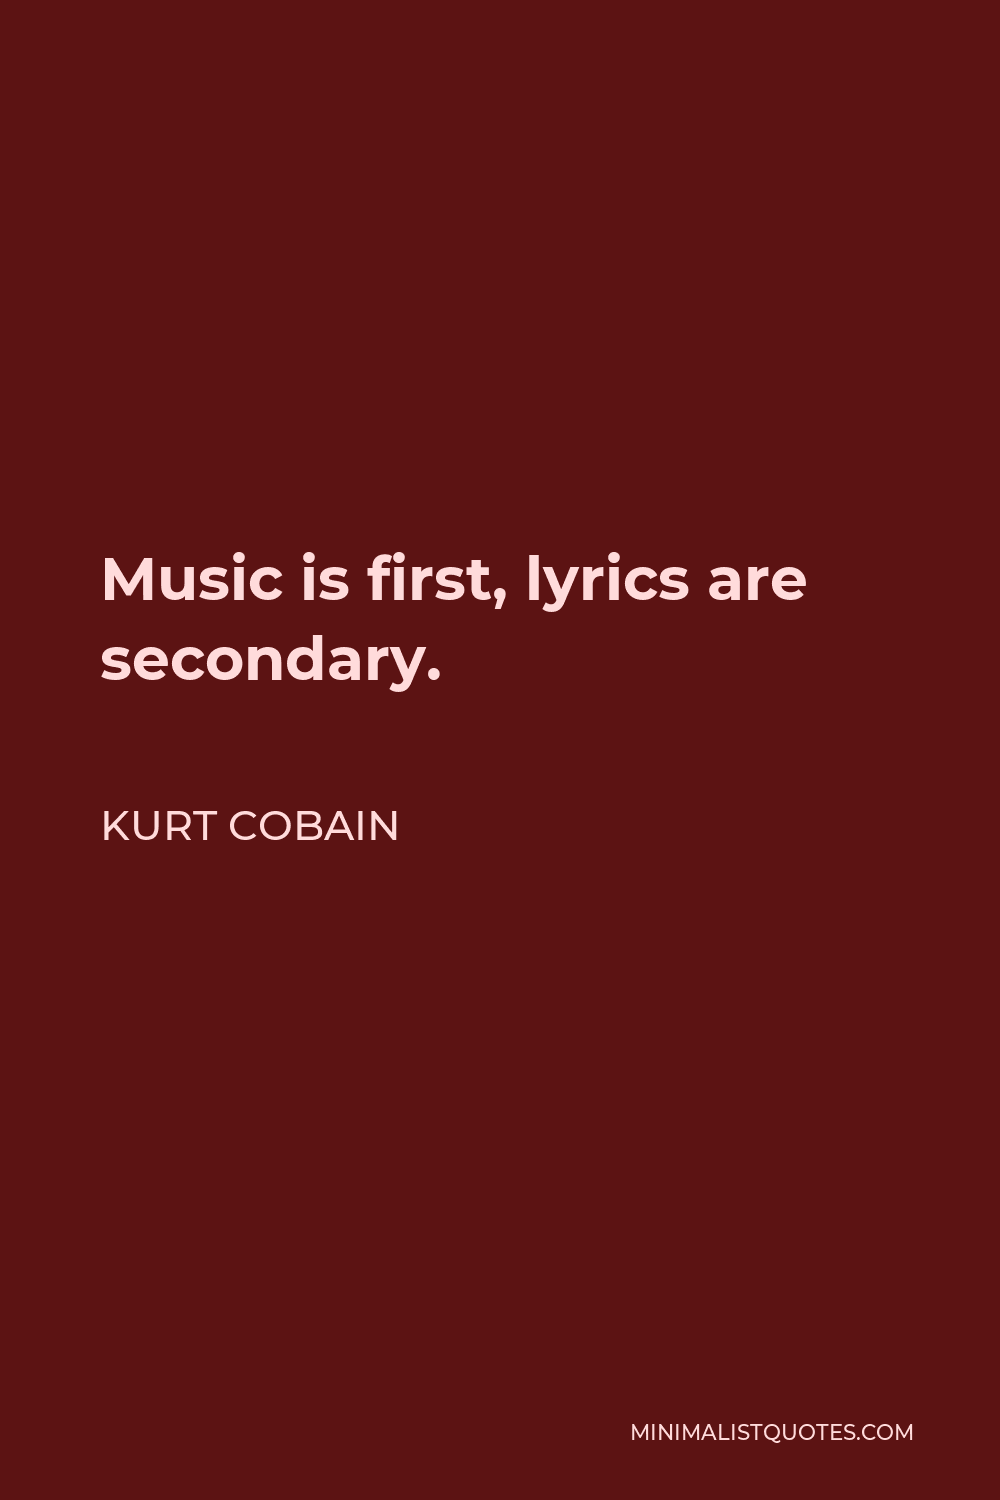 Kurt Cobain Quote - Music is first, lyrics are secondary.